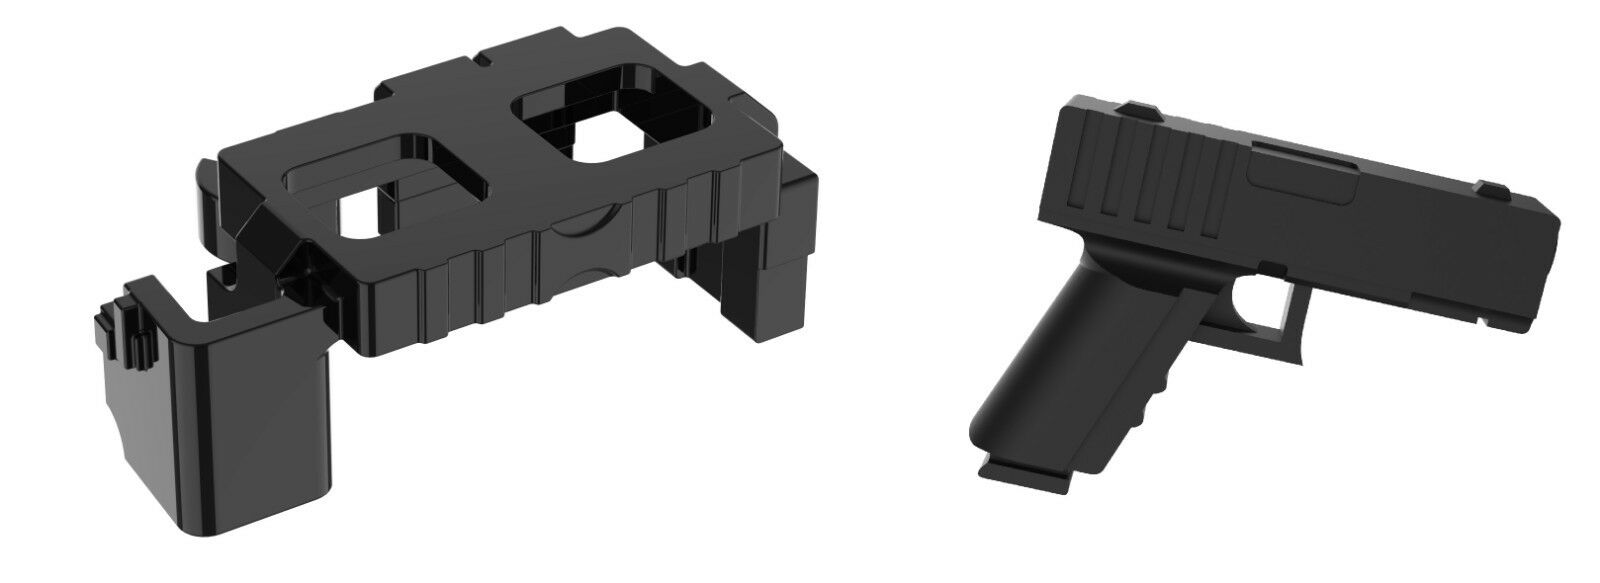 SG17+Black Tactical belt (W187+37) G1 9mm pistol compatible w/ toy brick minifig